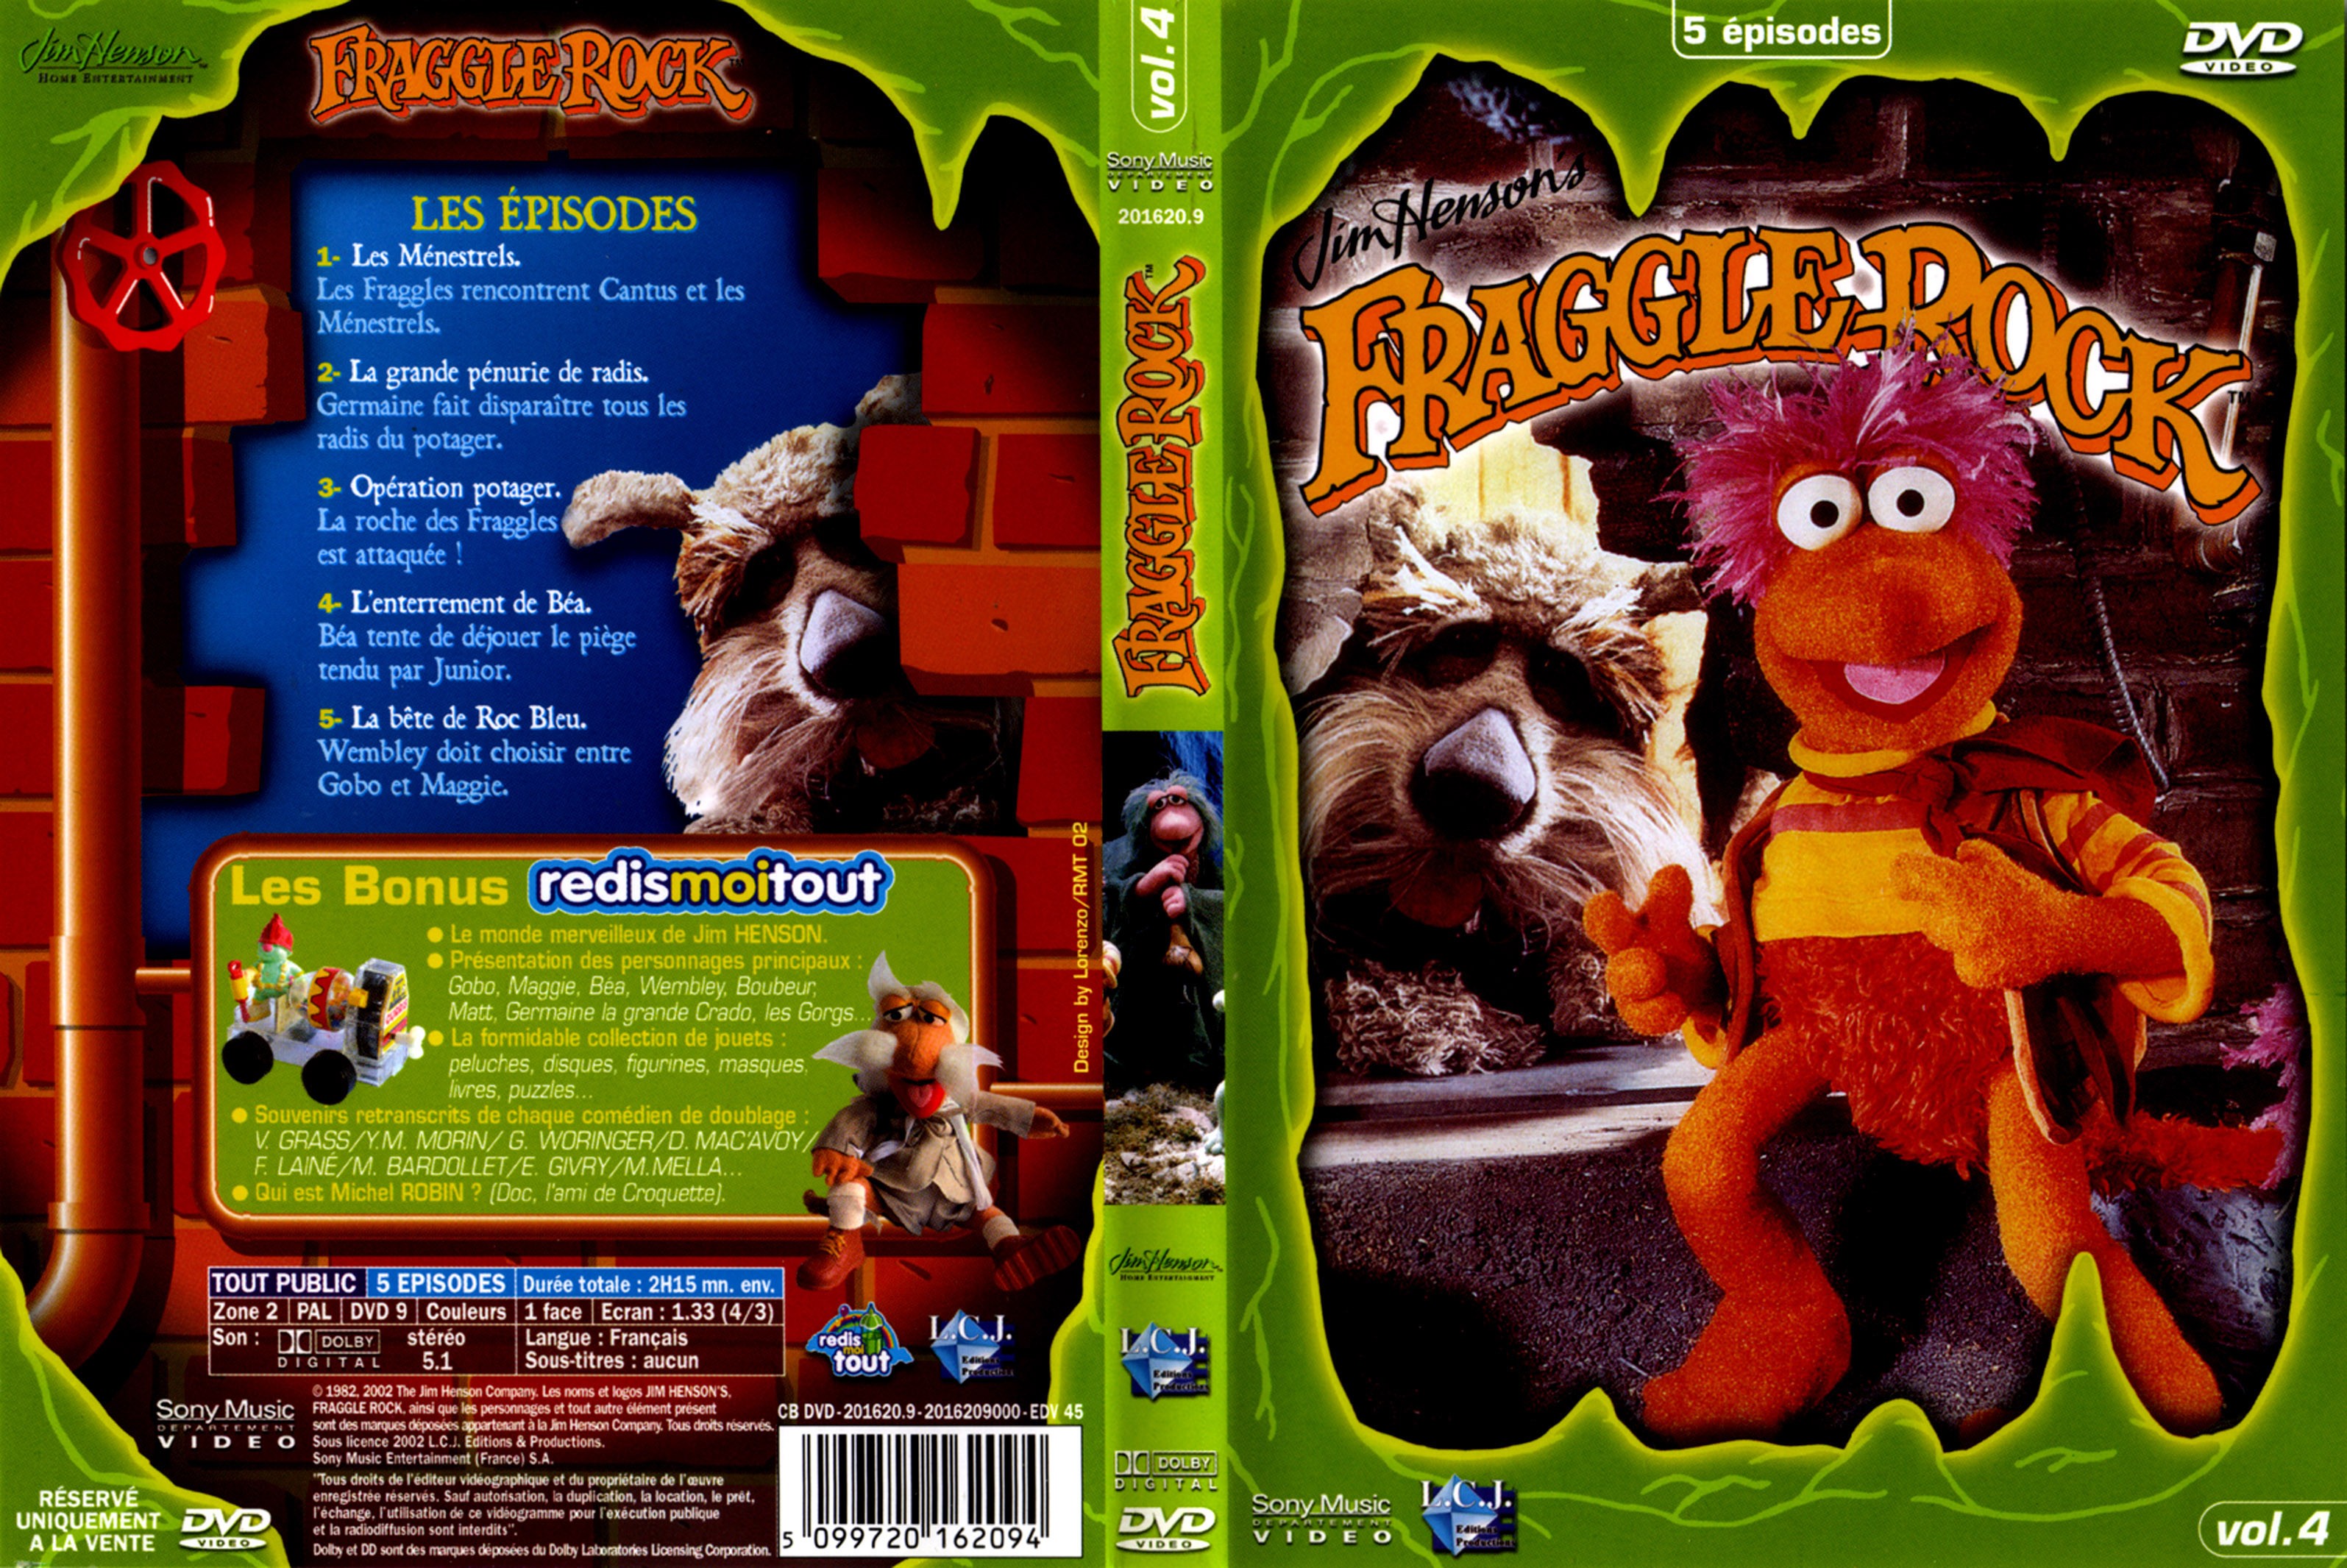 Jaquette DVD Fraggle rock vol 4